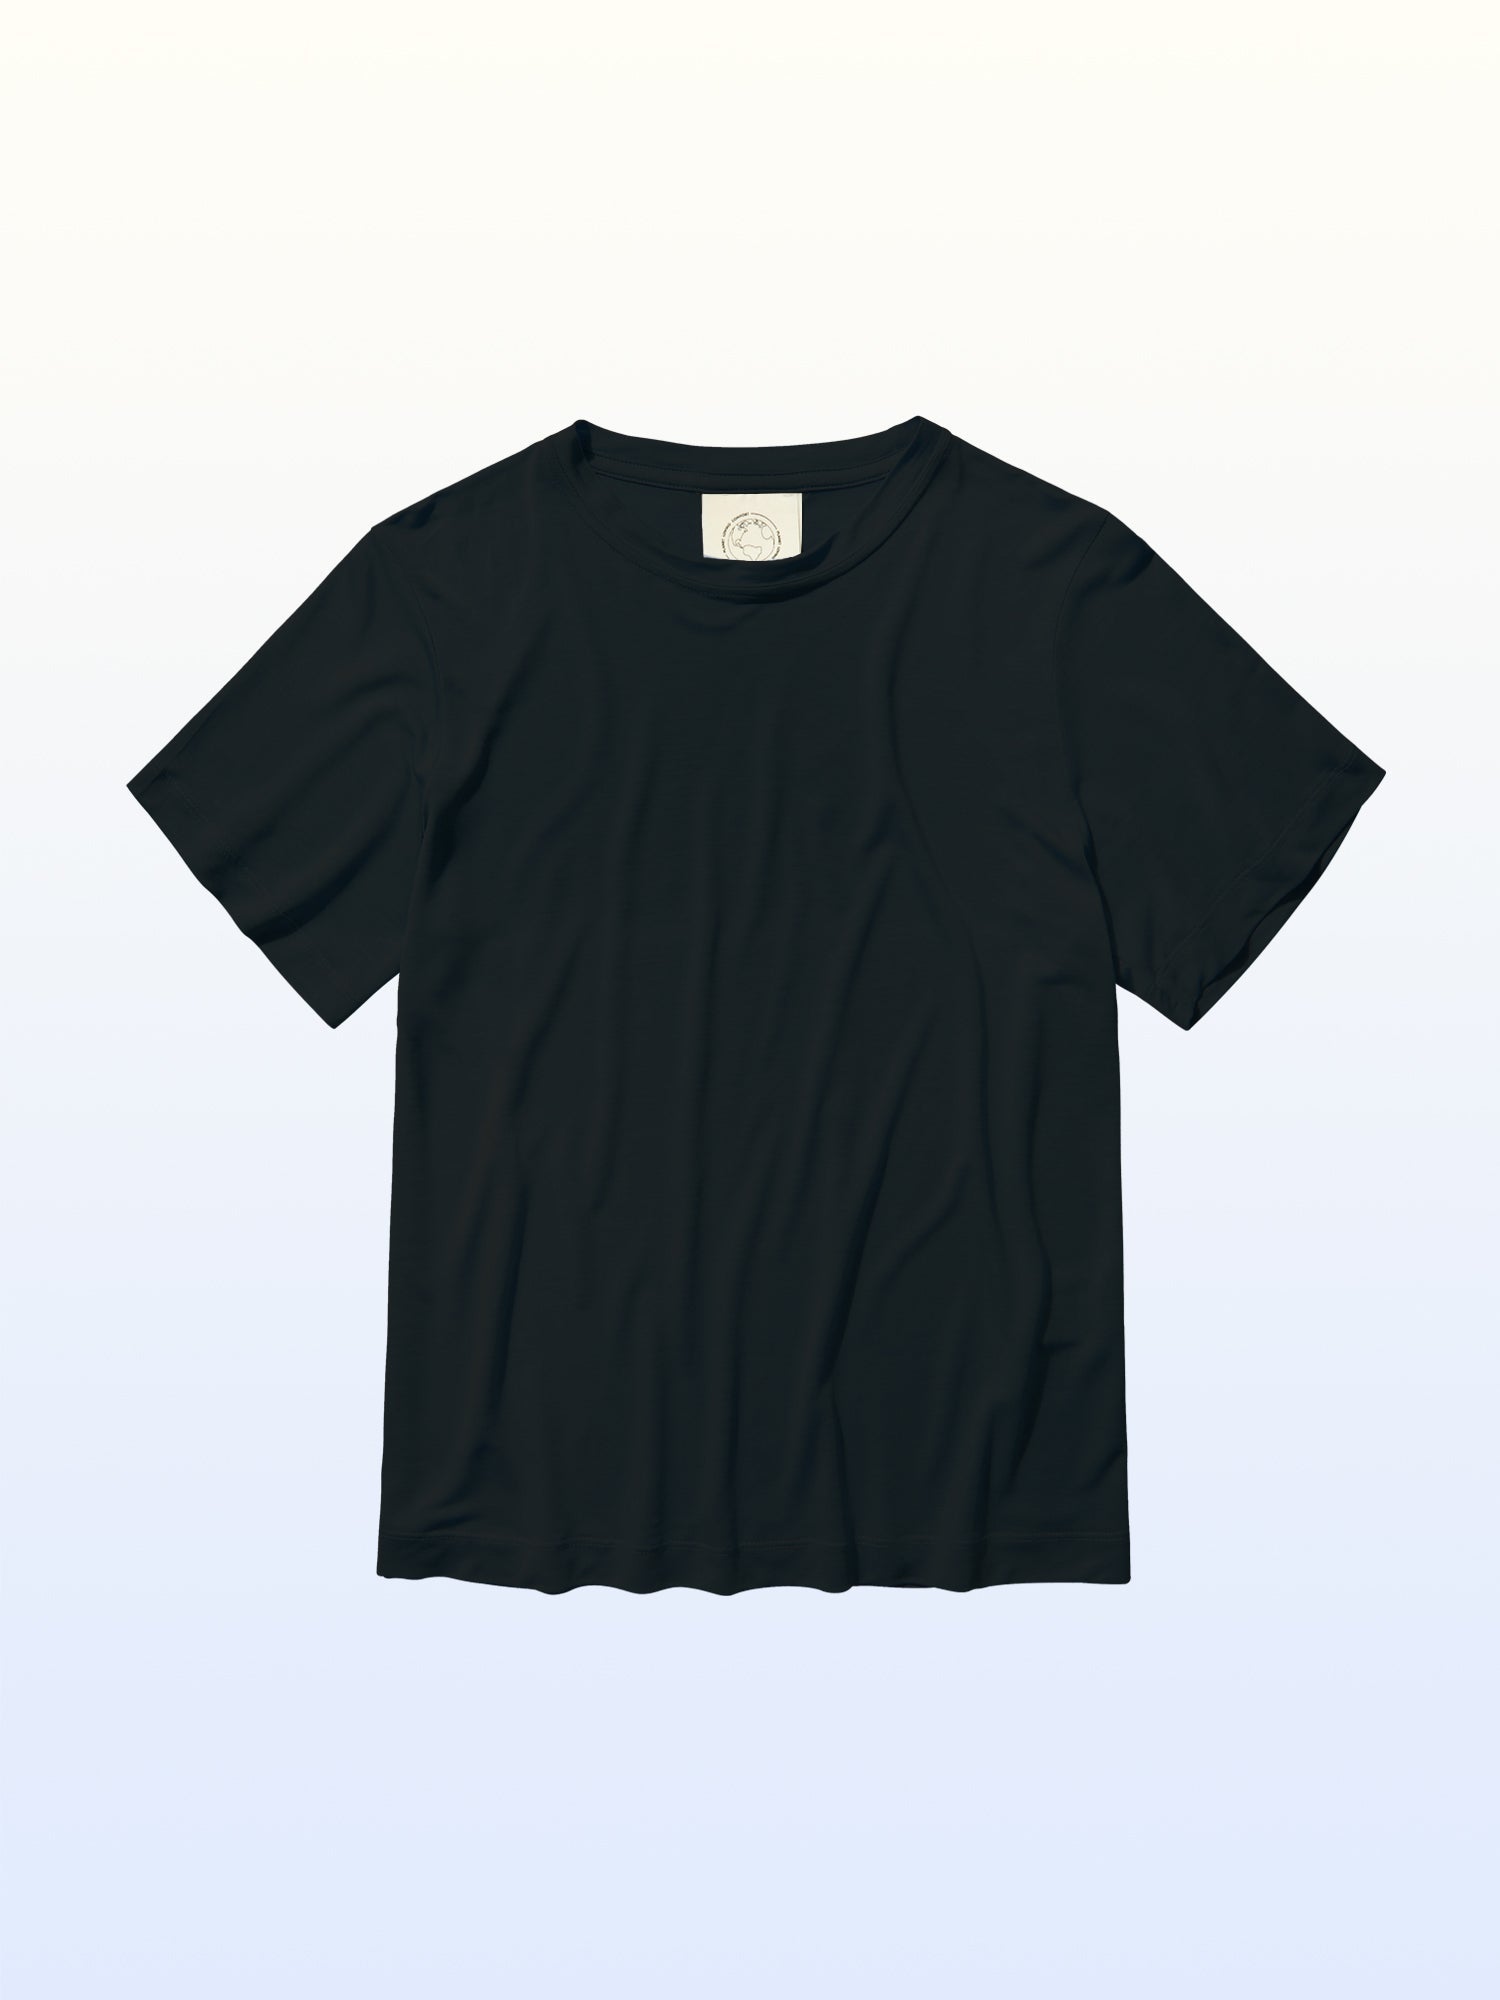 Planet_Loving-Company-Lyocell-T-shirt-Black-Luxury-Sustainable_3f257f0c-6904-4e2e-8ef8-3bc415ed5ee2.jpg